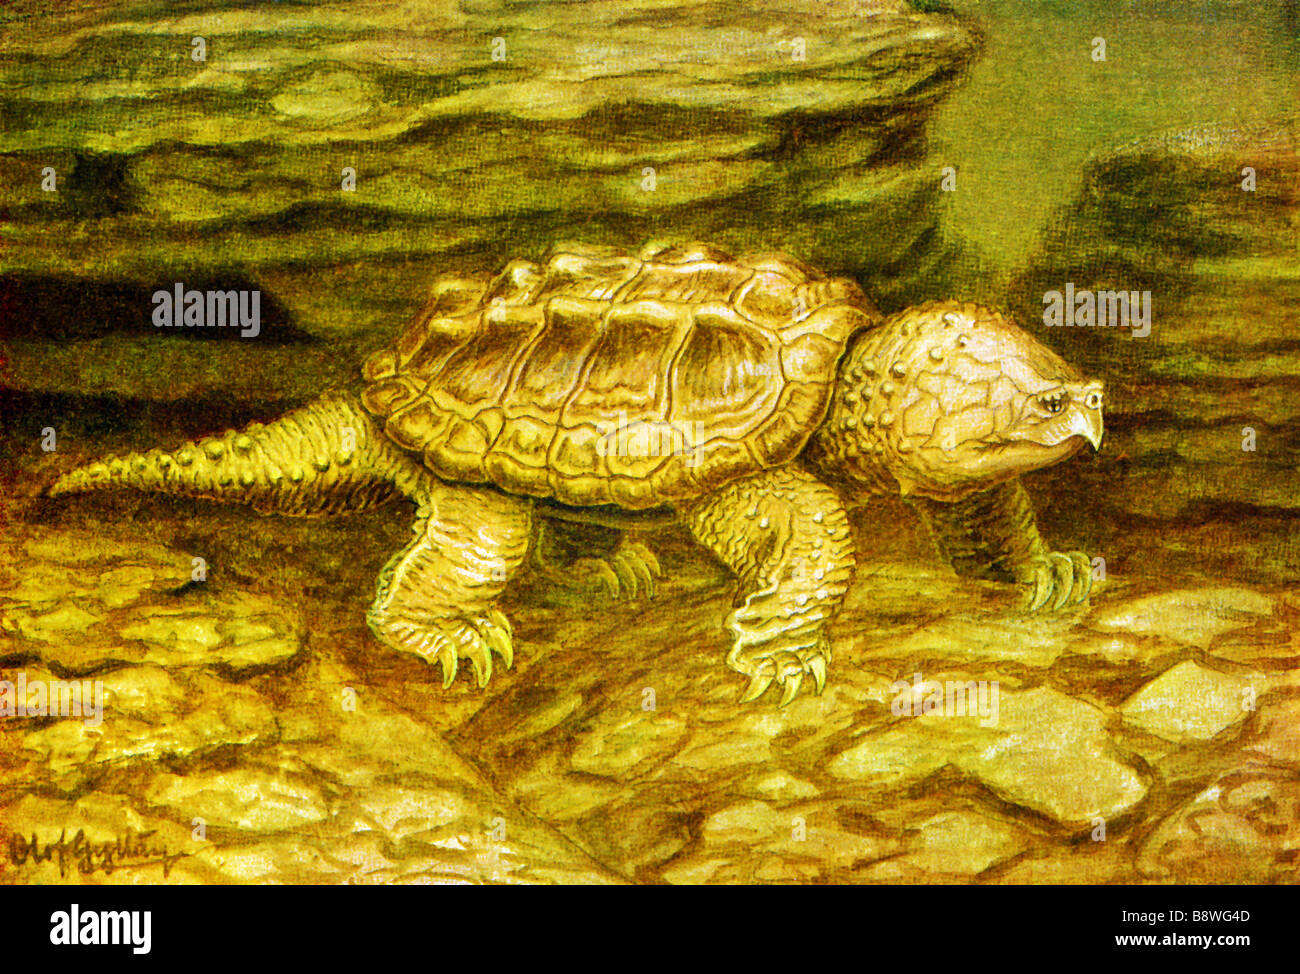 Snapping alligatore tartaruga (Macrochelys temminckii) Foto Stock